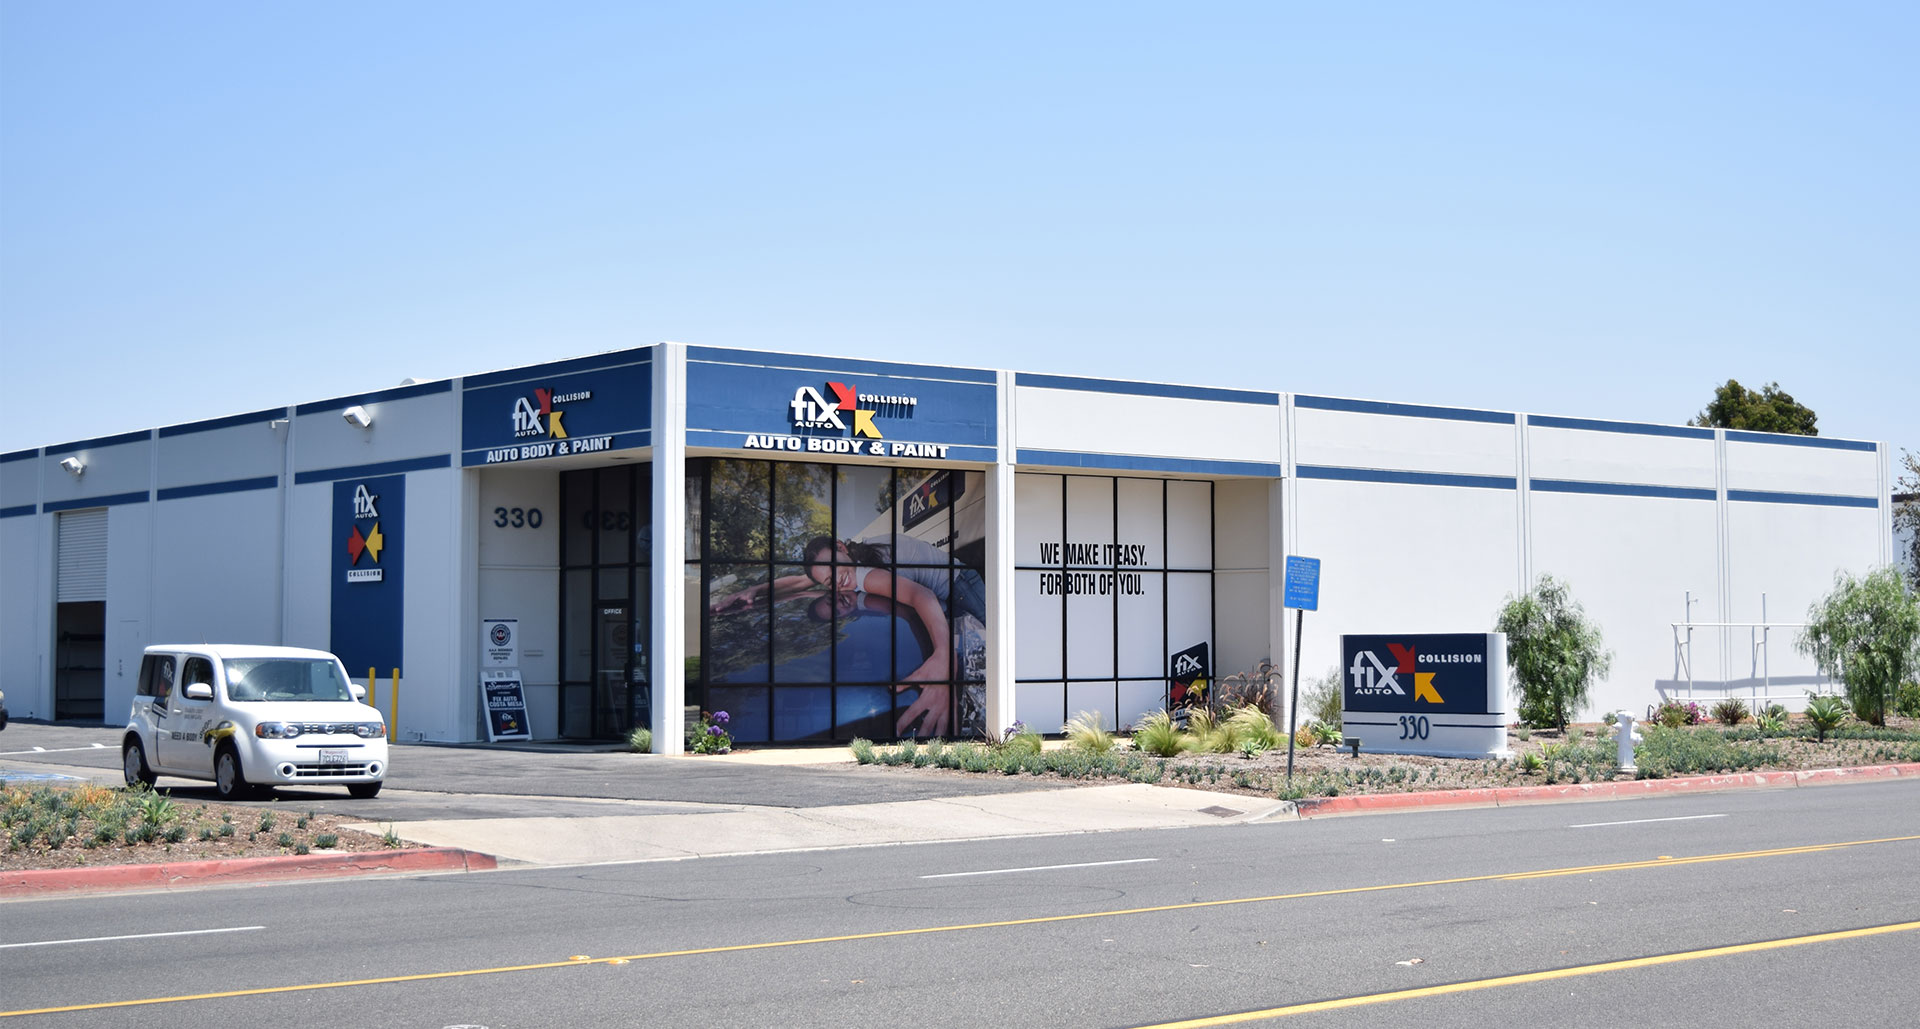 Fix Auto Costa Mesa Auto Body Shop Sign and Building Exterior